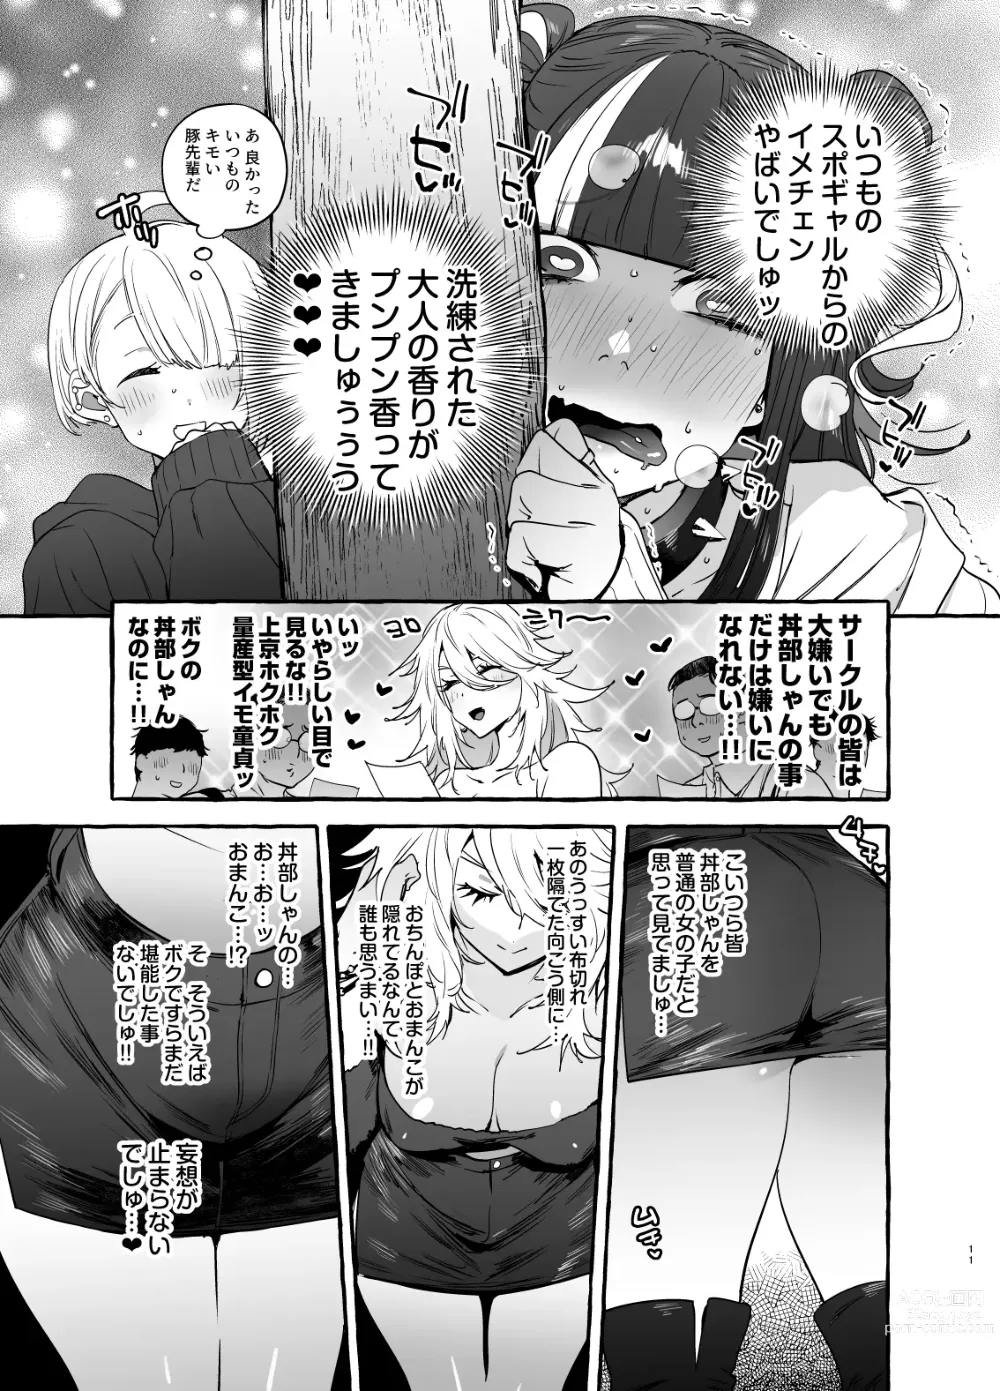 Page 13 of doujinshi Wotasa no Gyaru VS Jirai Otoko